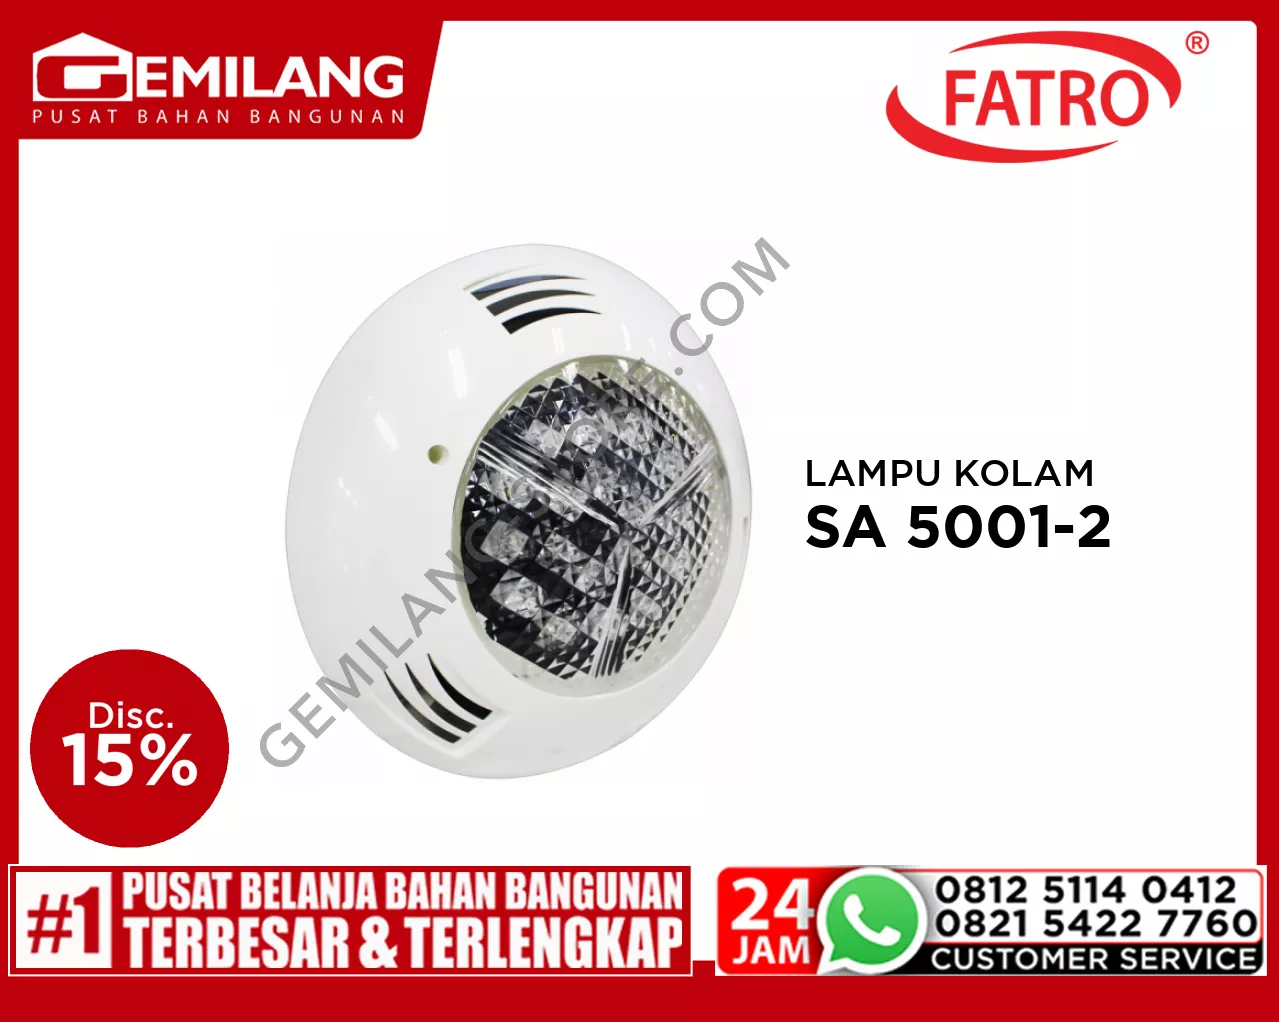 FATRO LAMPU KOLAM SA 5001-2 W.WH 12w/12v